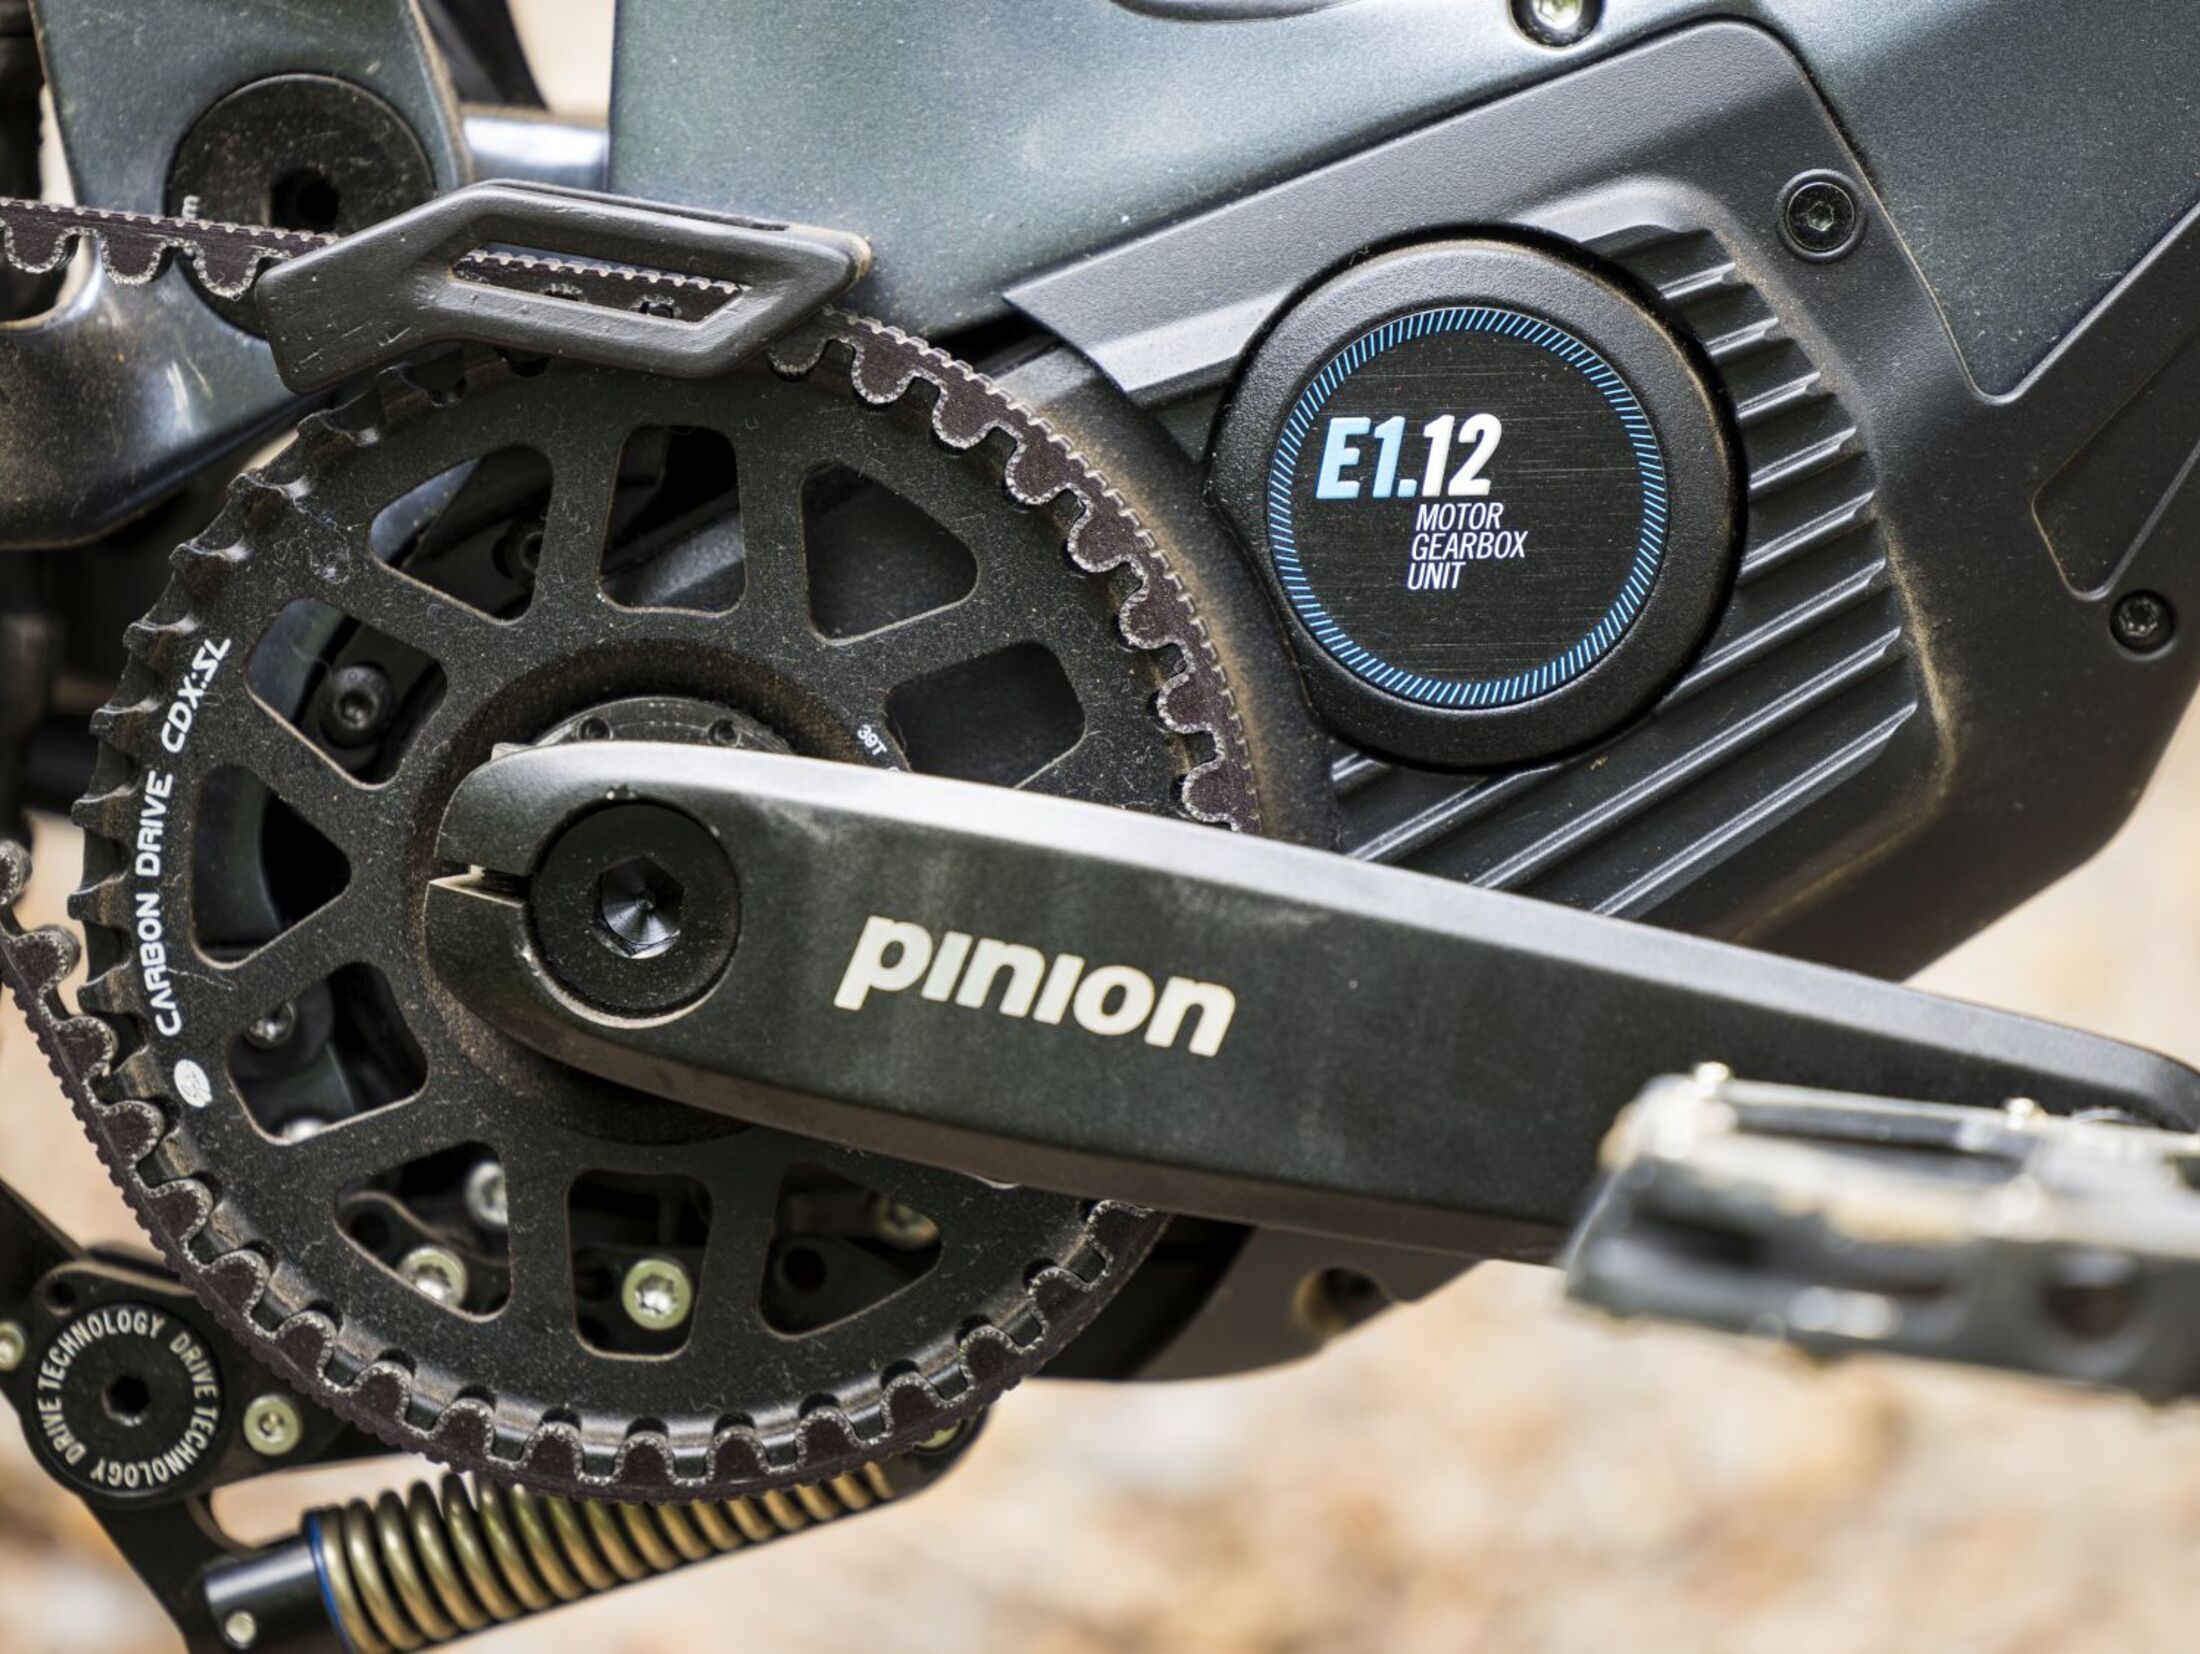 Pinion Motor Gearbox Unit: Infos, Fahrbericht, Video und Podcast!